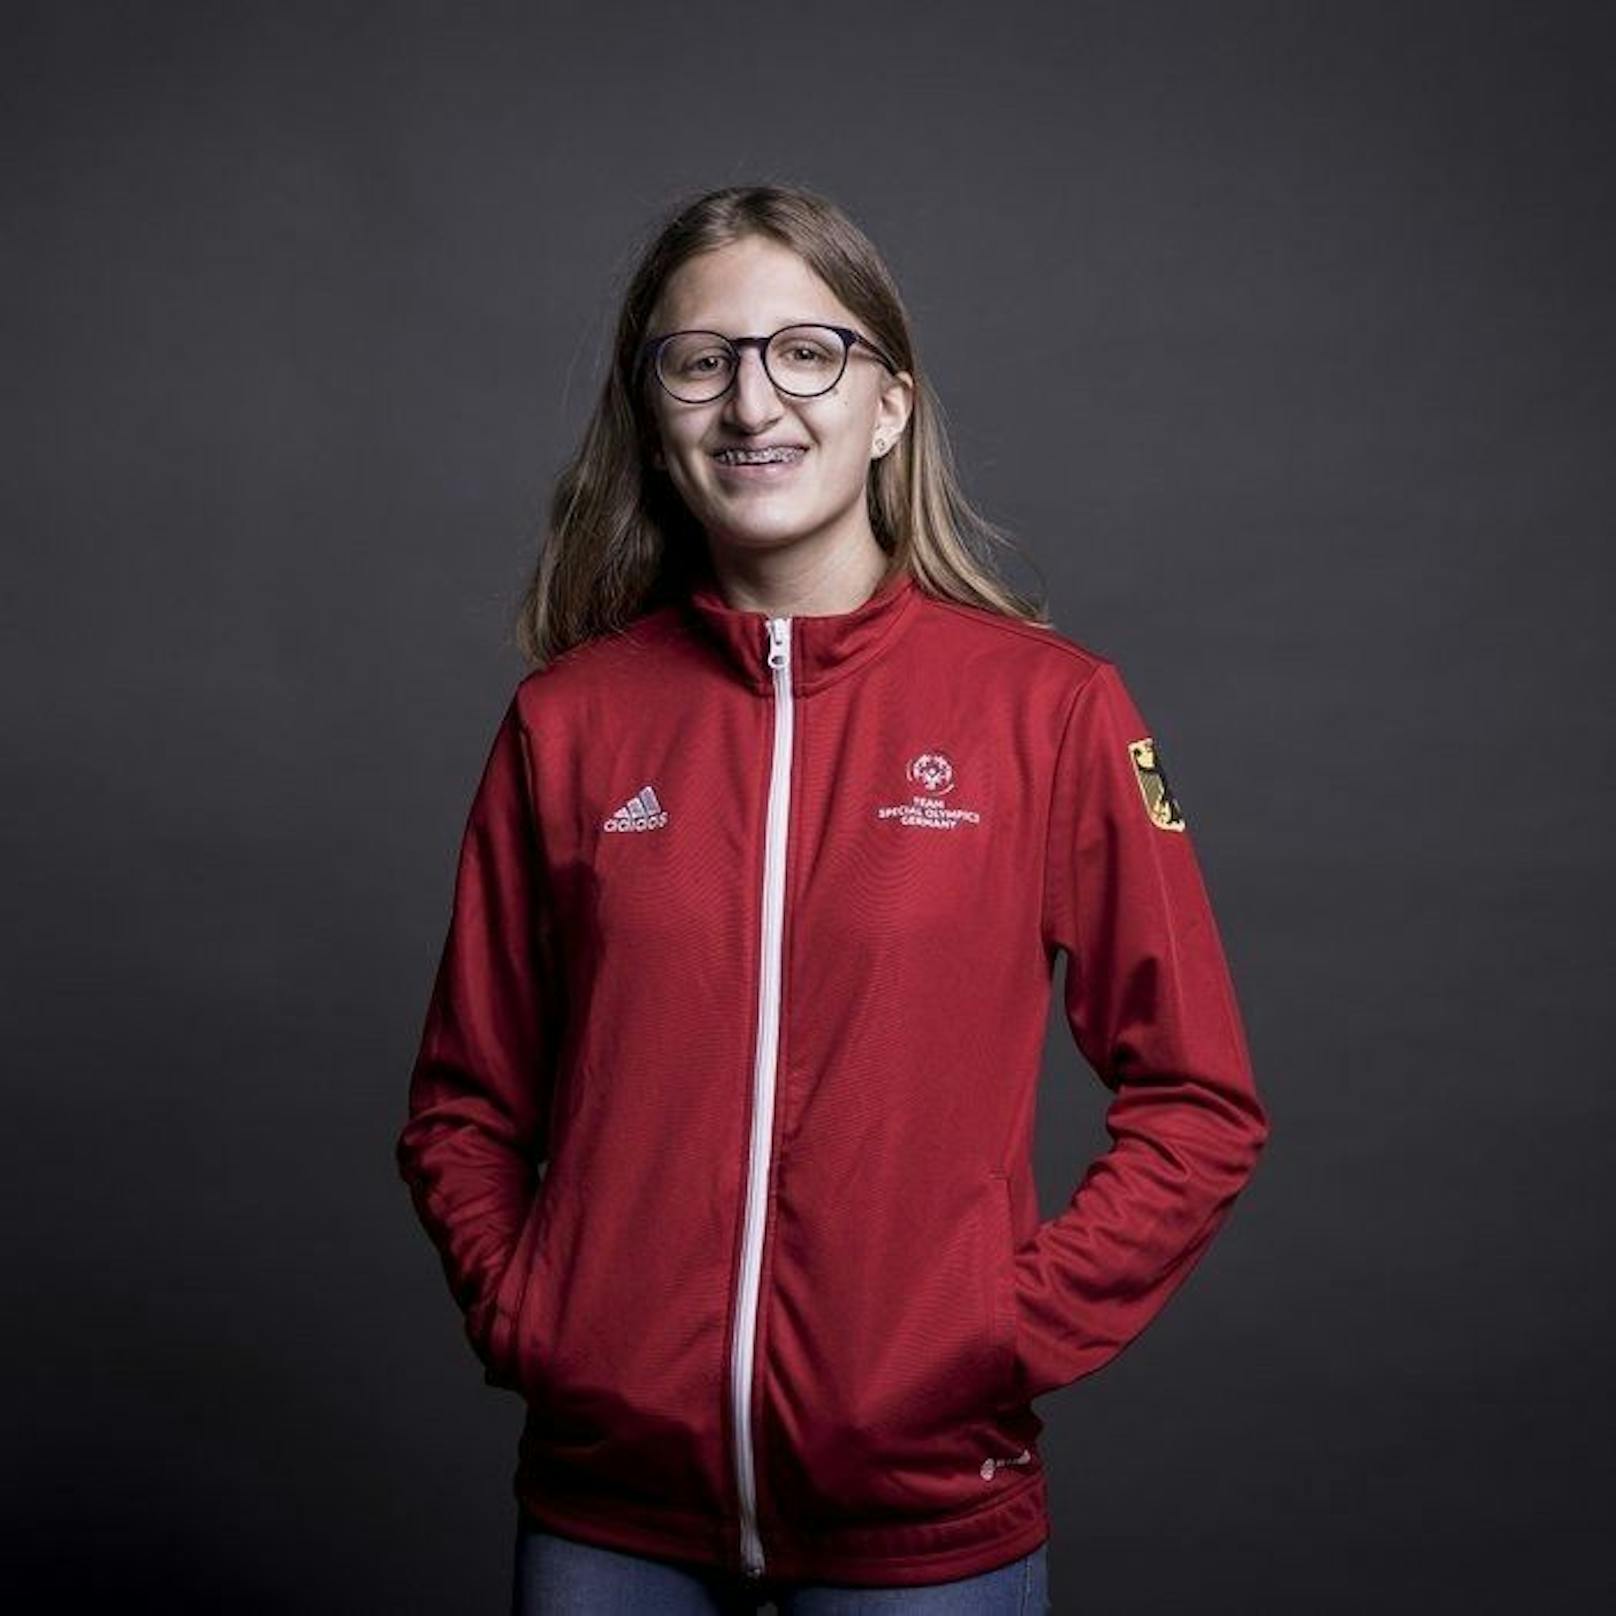 Special-Olympics-Talent (15) gesperrt – sie war zu schnell